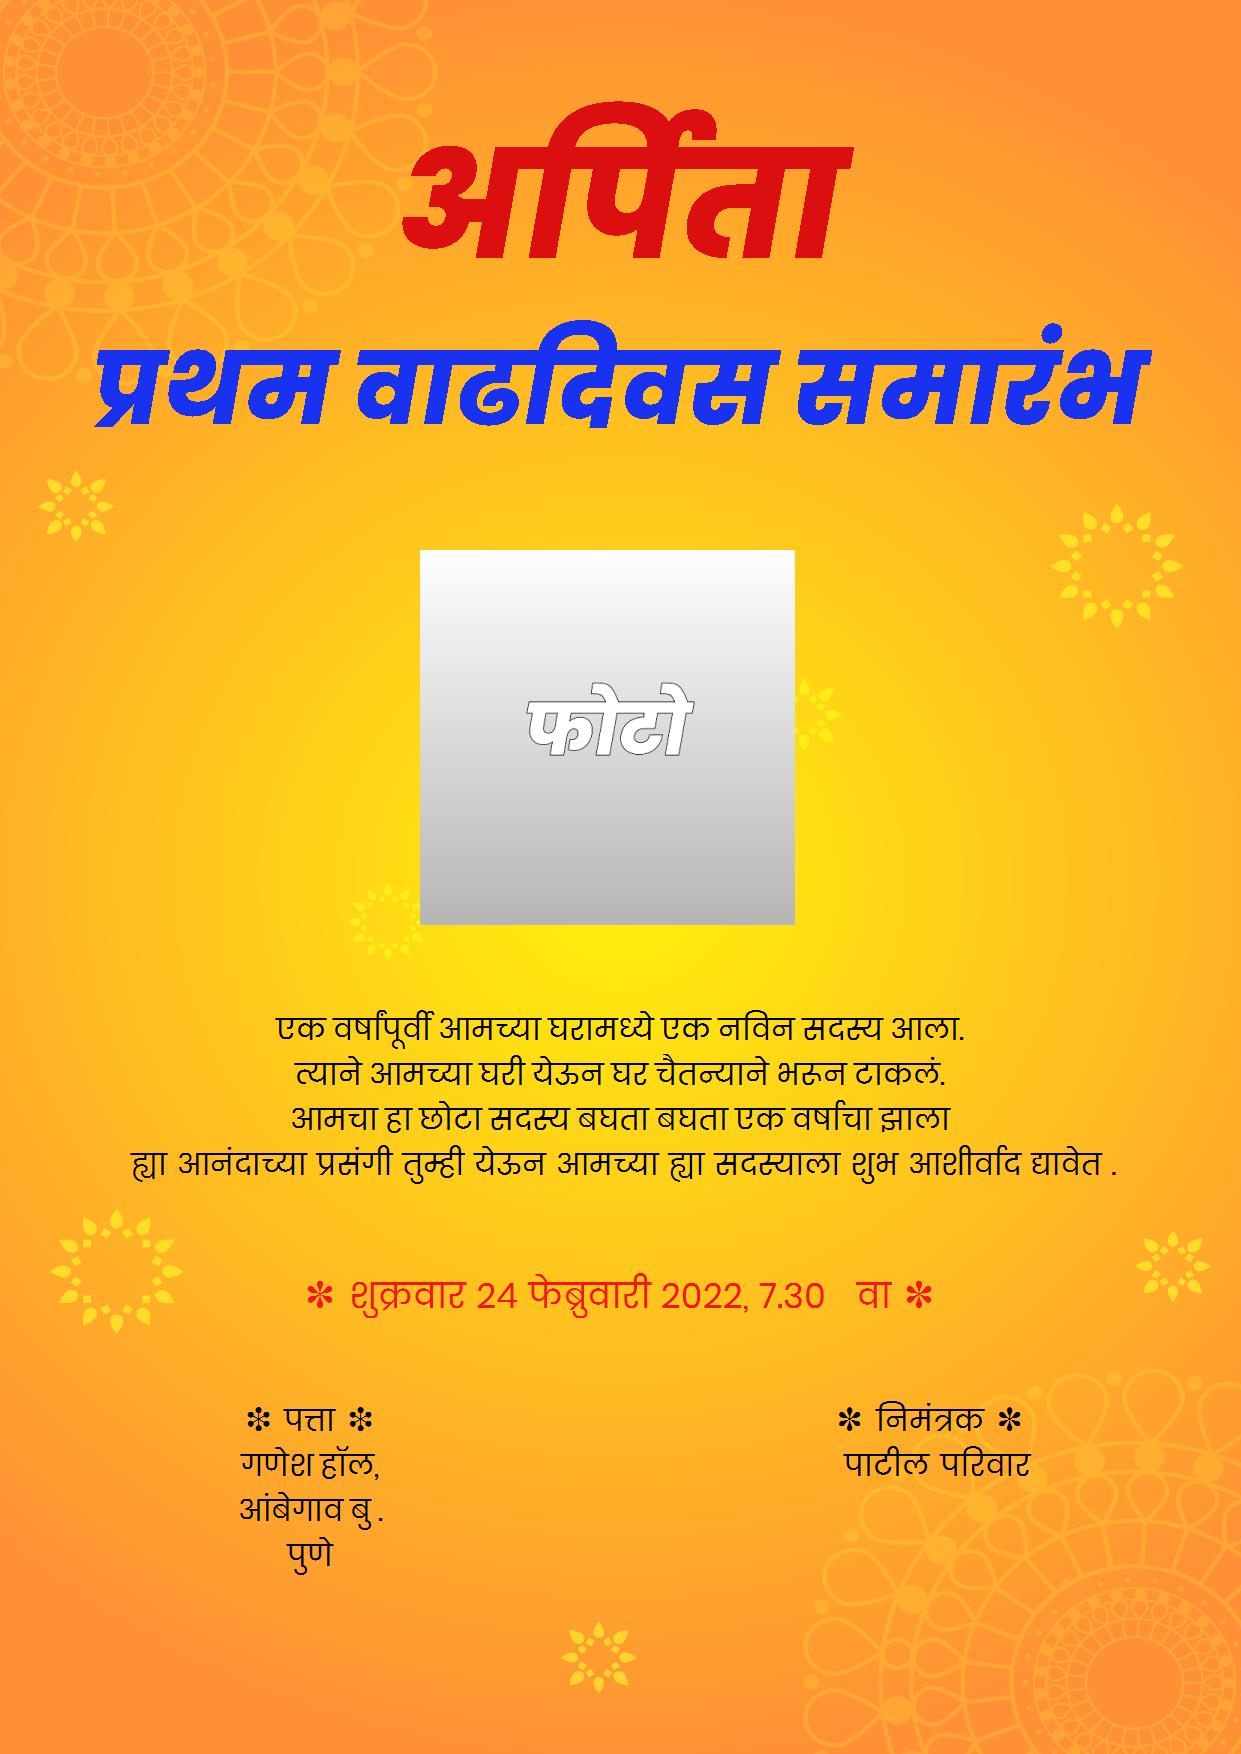 birthday invitation card in marathi